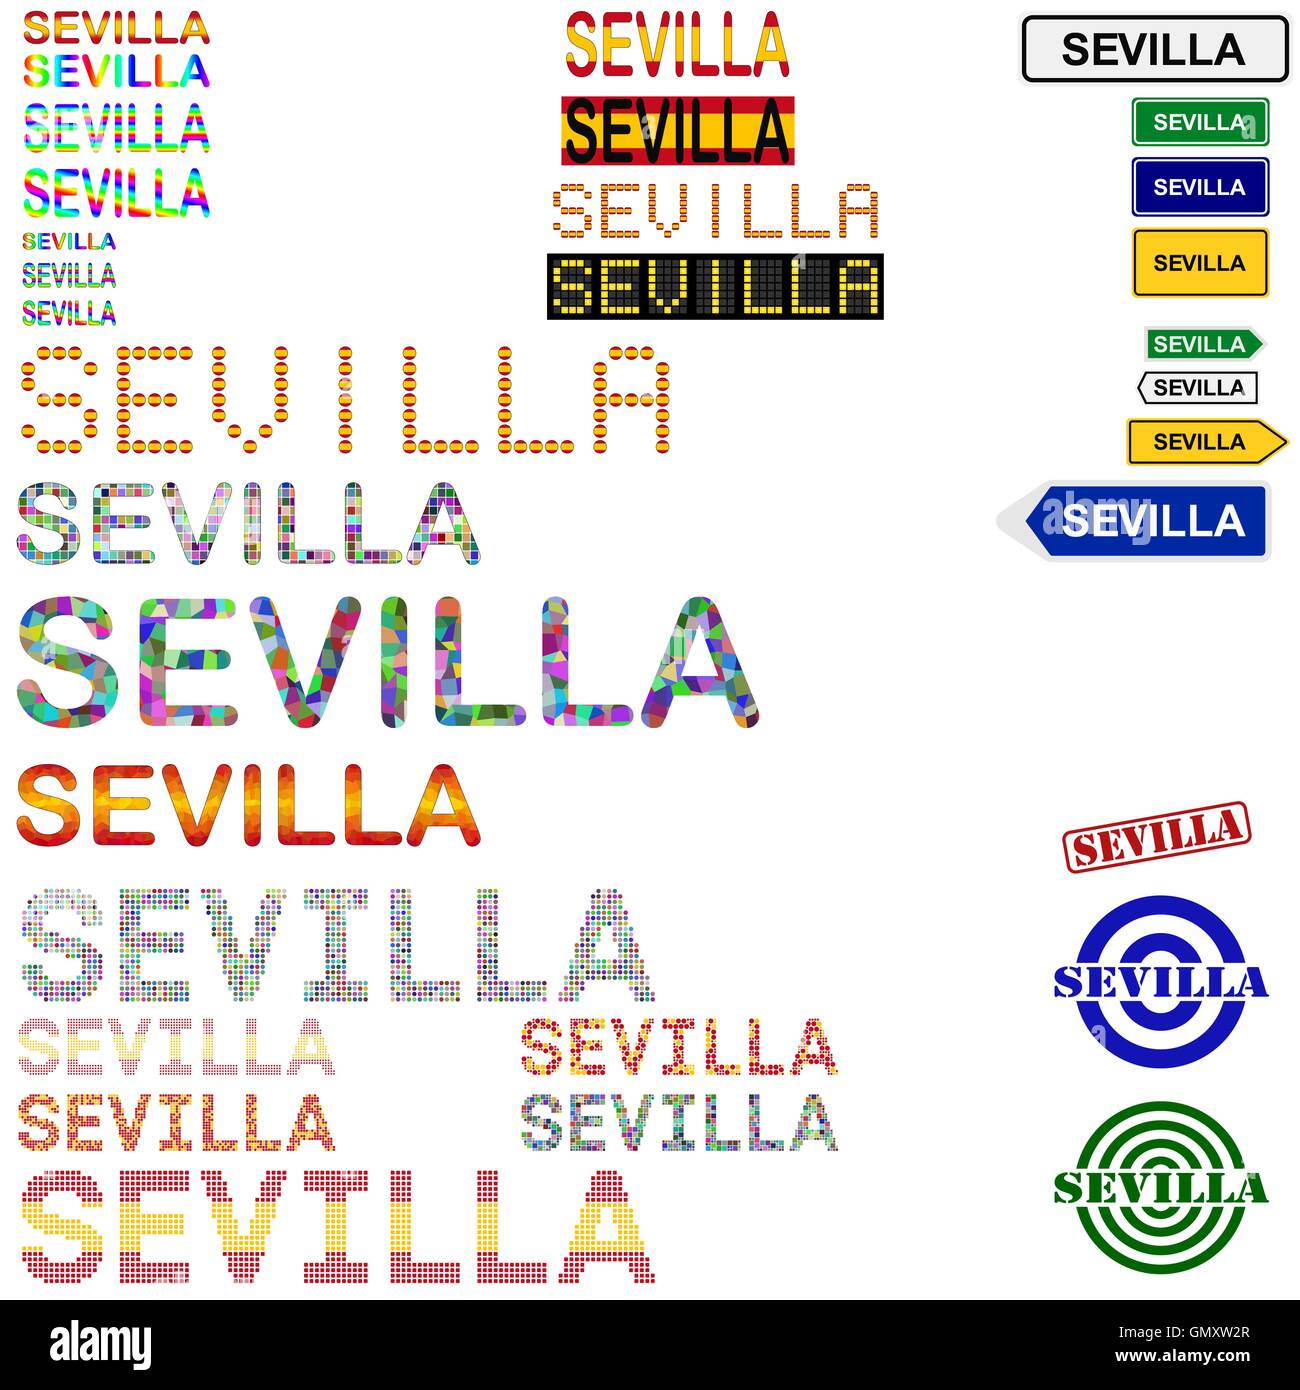 Sevilla (Seville) text design set Stock Vector